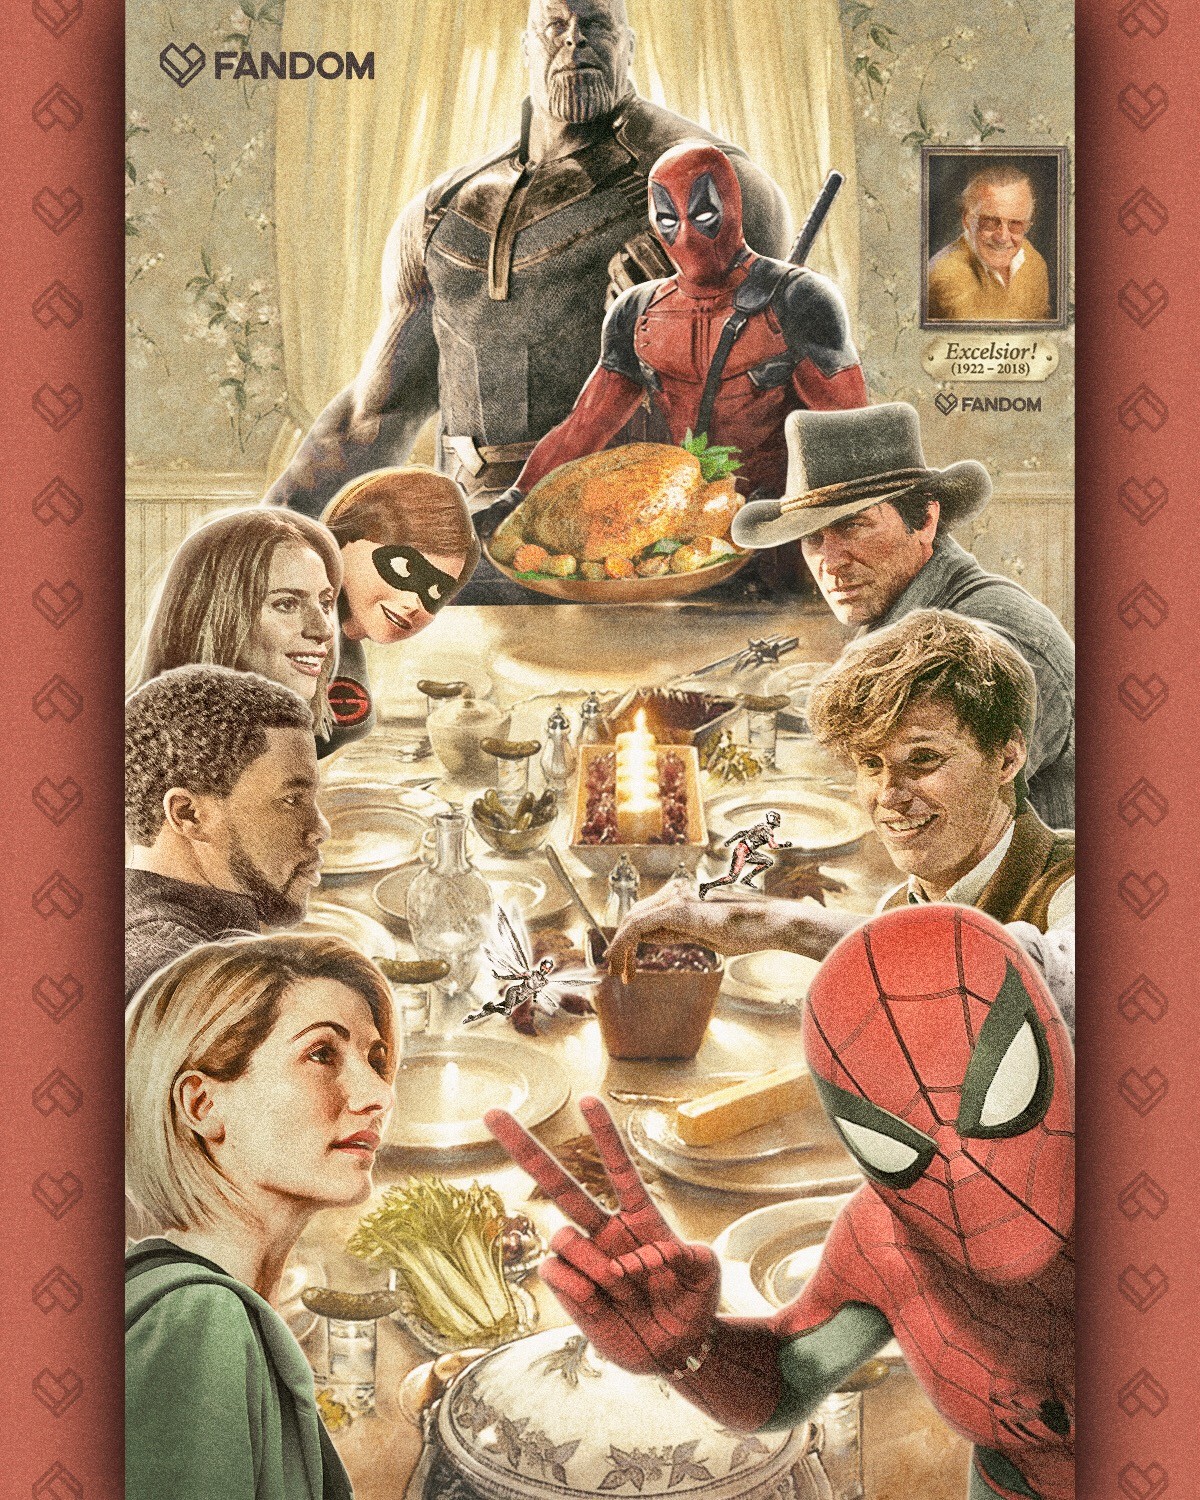 Thanksgiving 2018